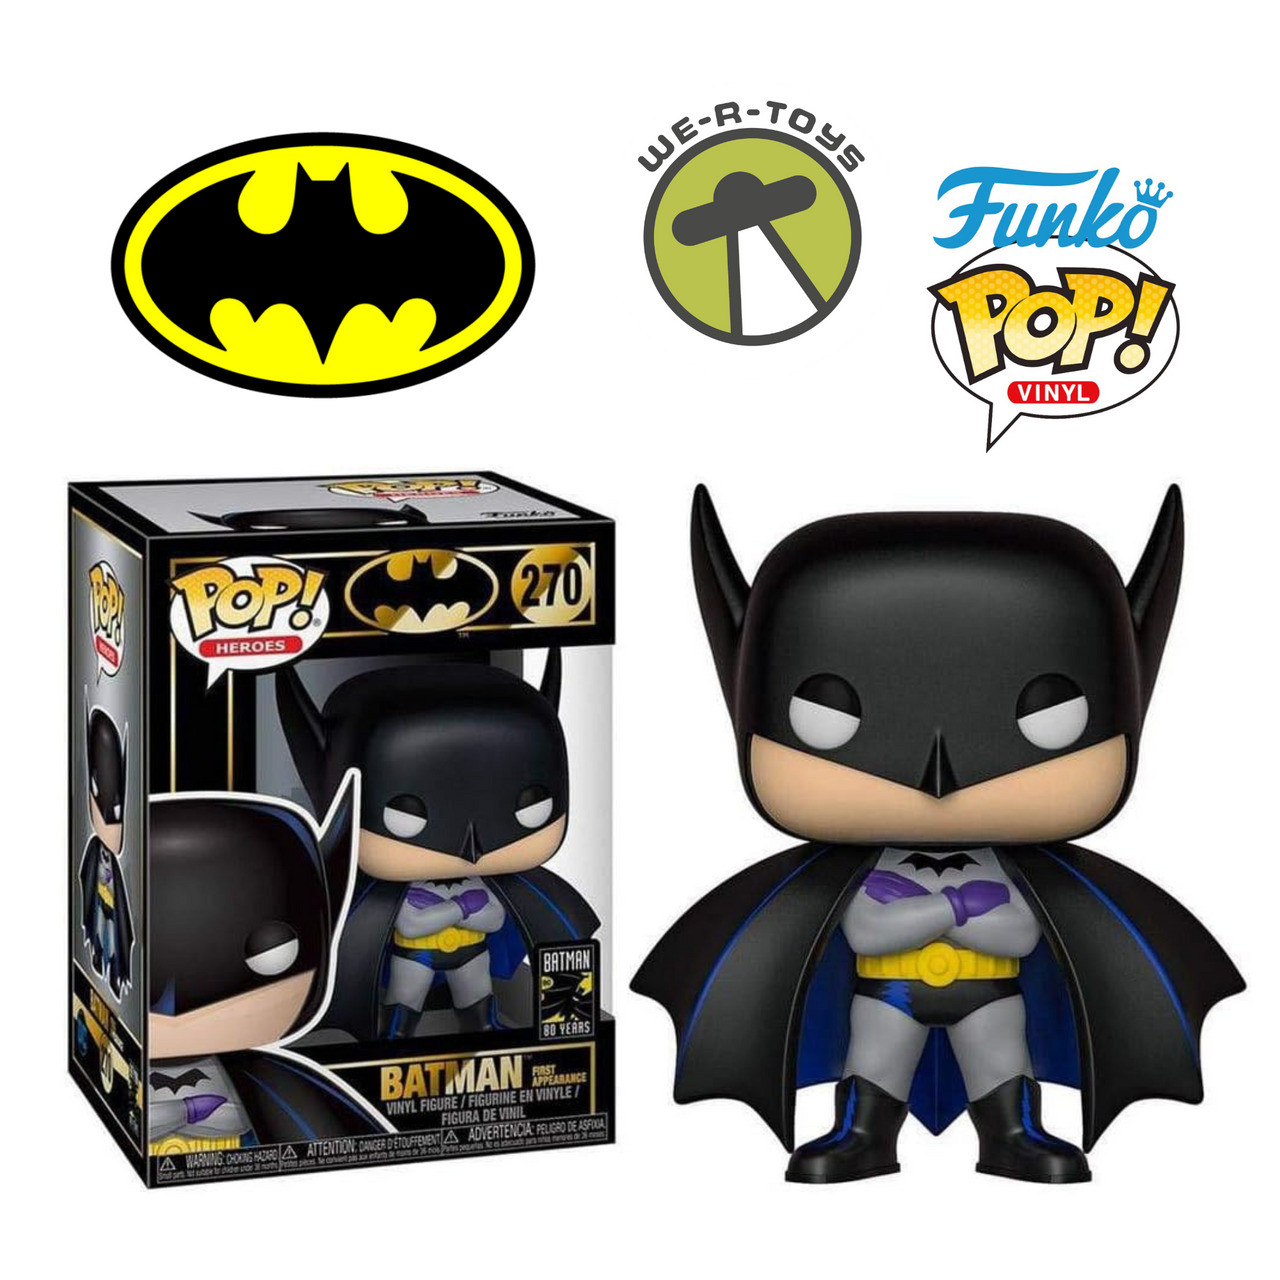 Funko Pop! Heroes 270 Batman First Appearance Vinyl Figure Batman 80 Years  2019 - We-R-Toys